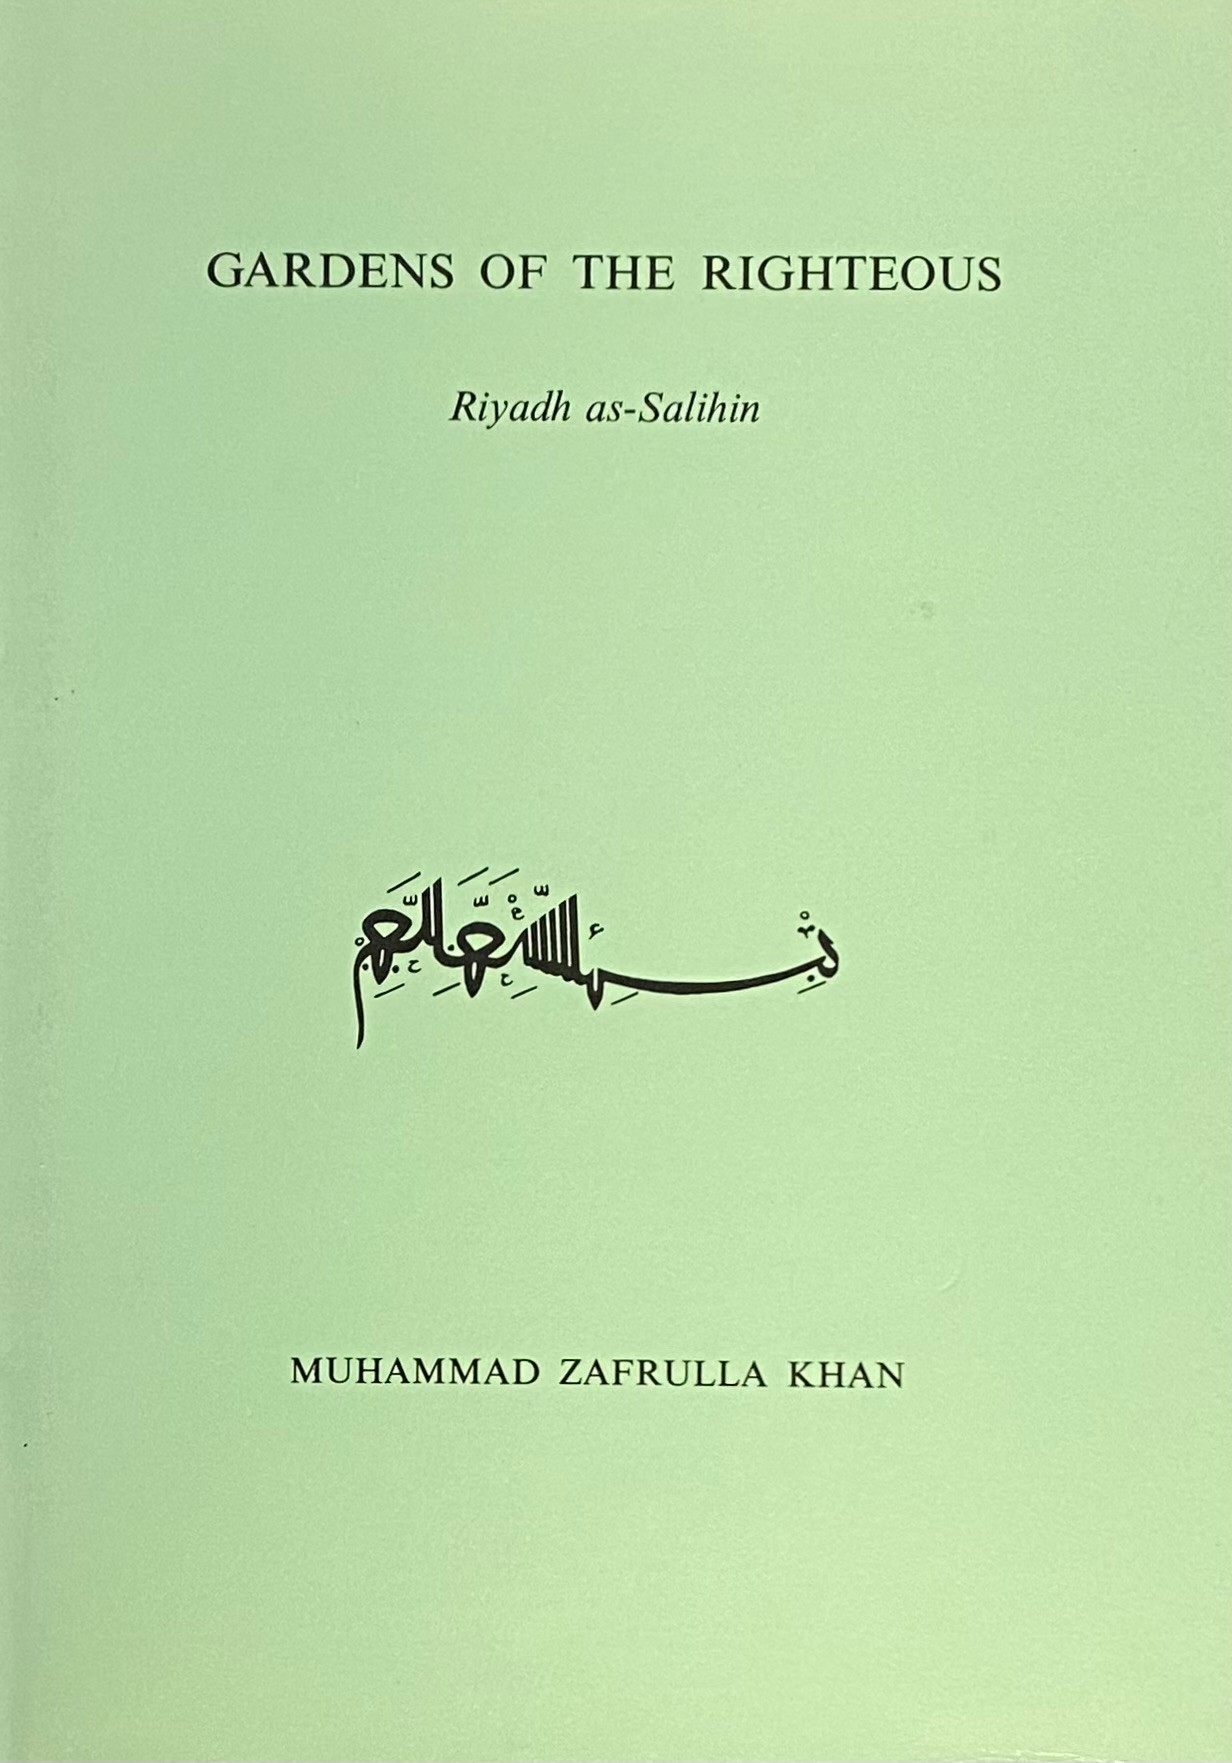 Gardens of The Righteous. Riyadh as-Salihin of Imam Nawawi. - Imam Nawawi/ Muhammd Zafrallah Khan (Trans.)